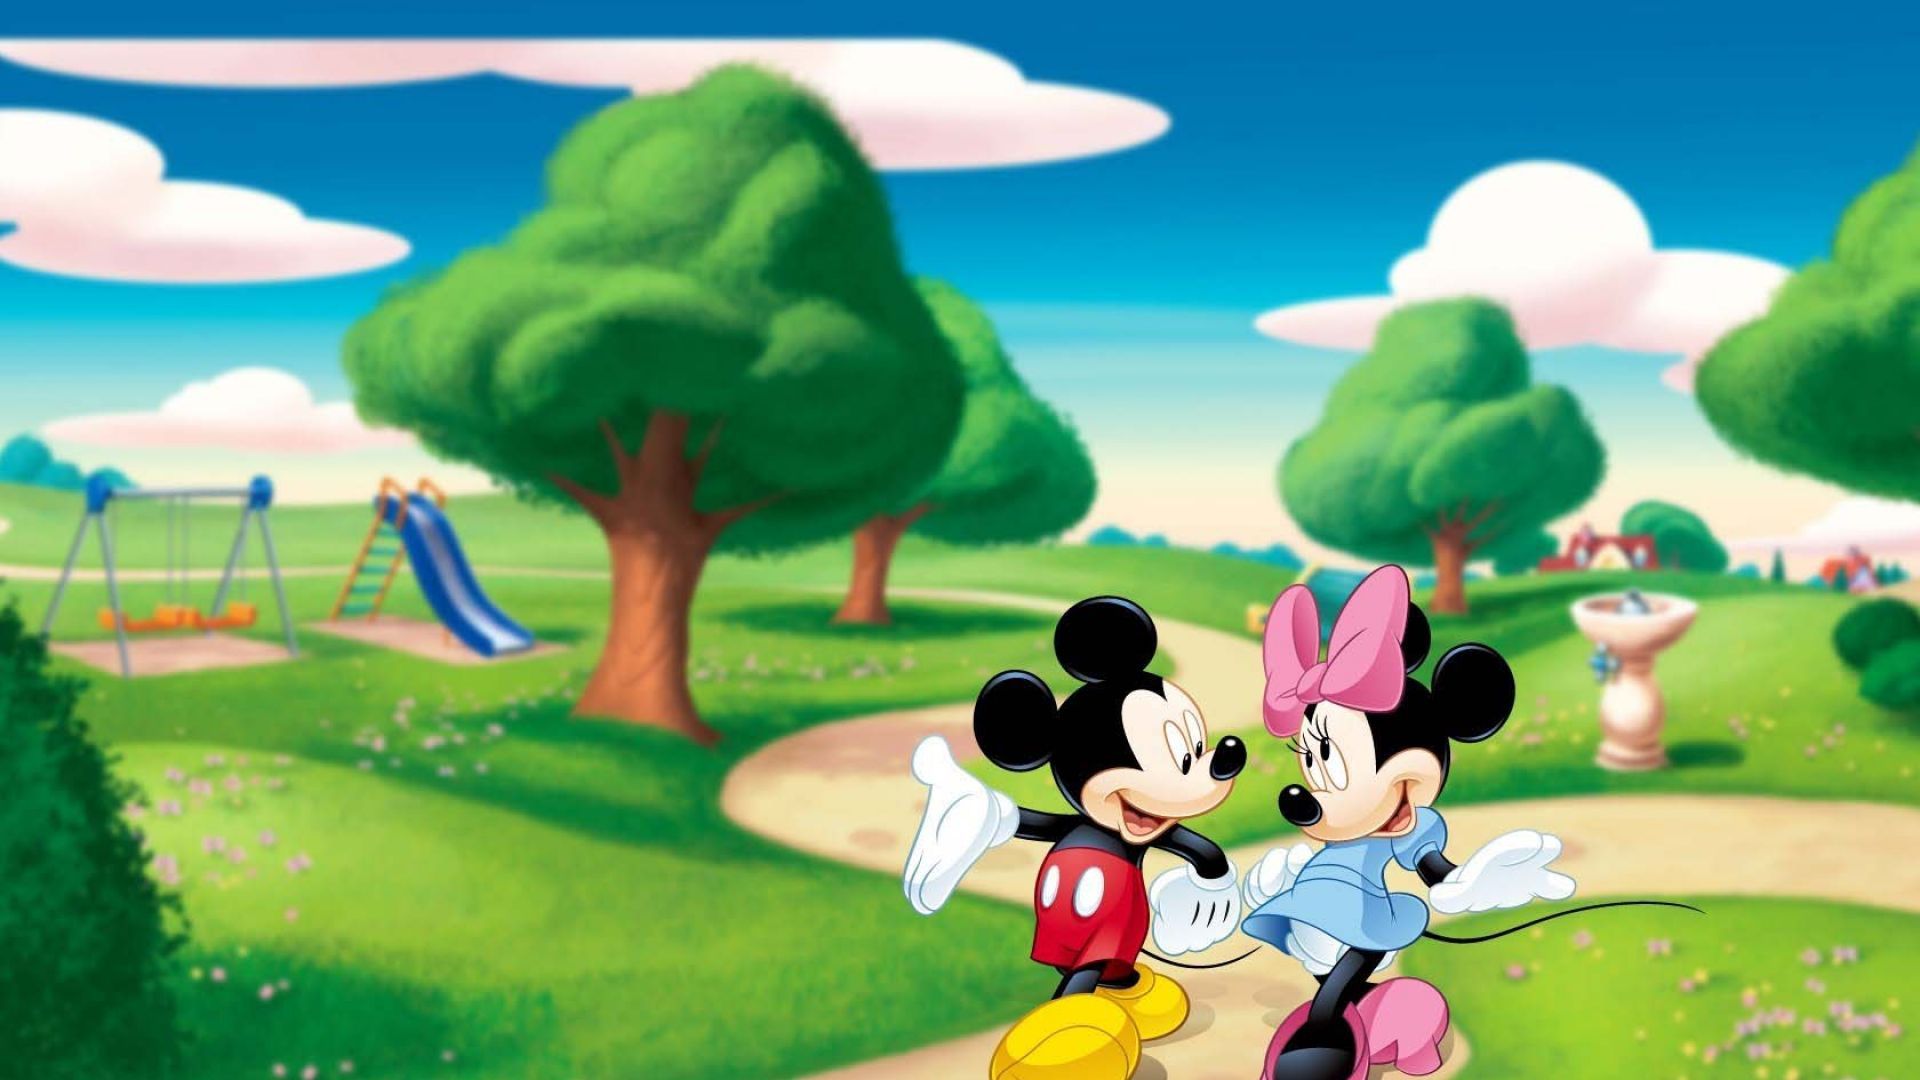 Mickey Mouse Wallpaper - Dibujos animados Fondos de pantalla | Todo es muro